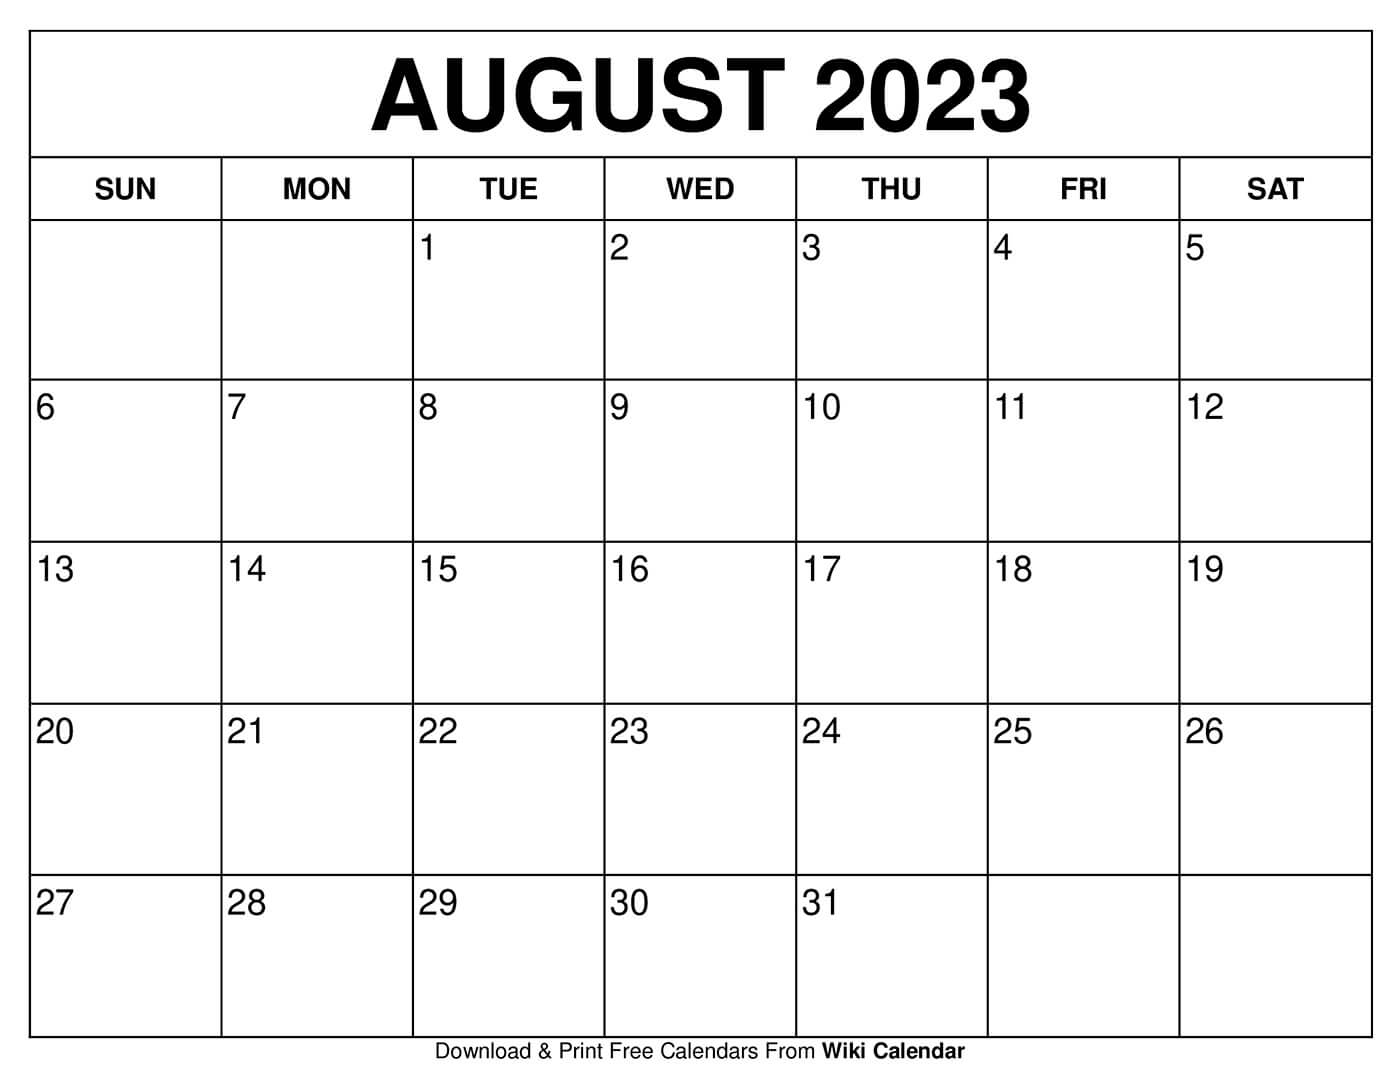 august-2021-calendar-printable-with-holidays-whatisthedatetoday-com